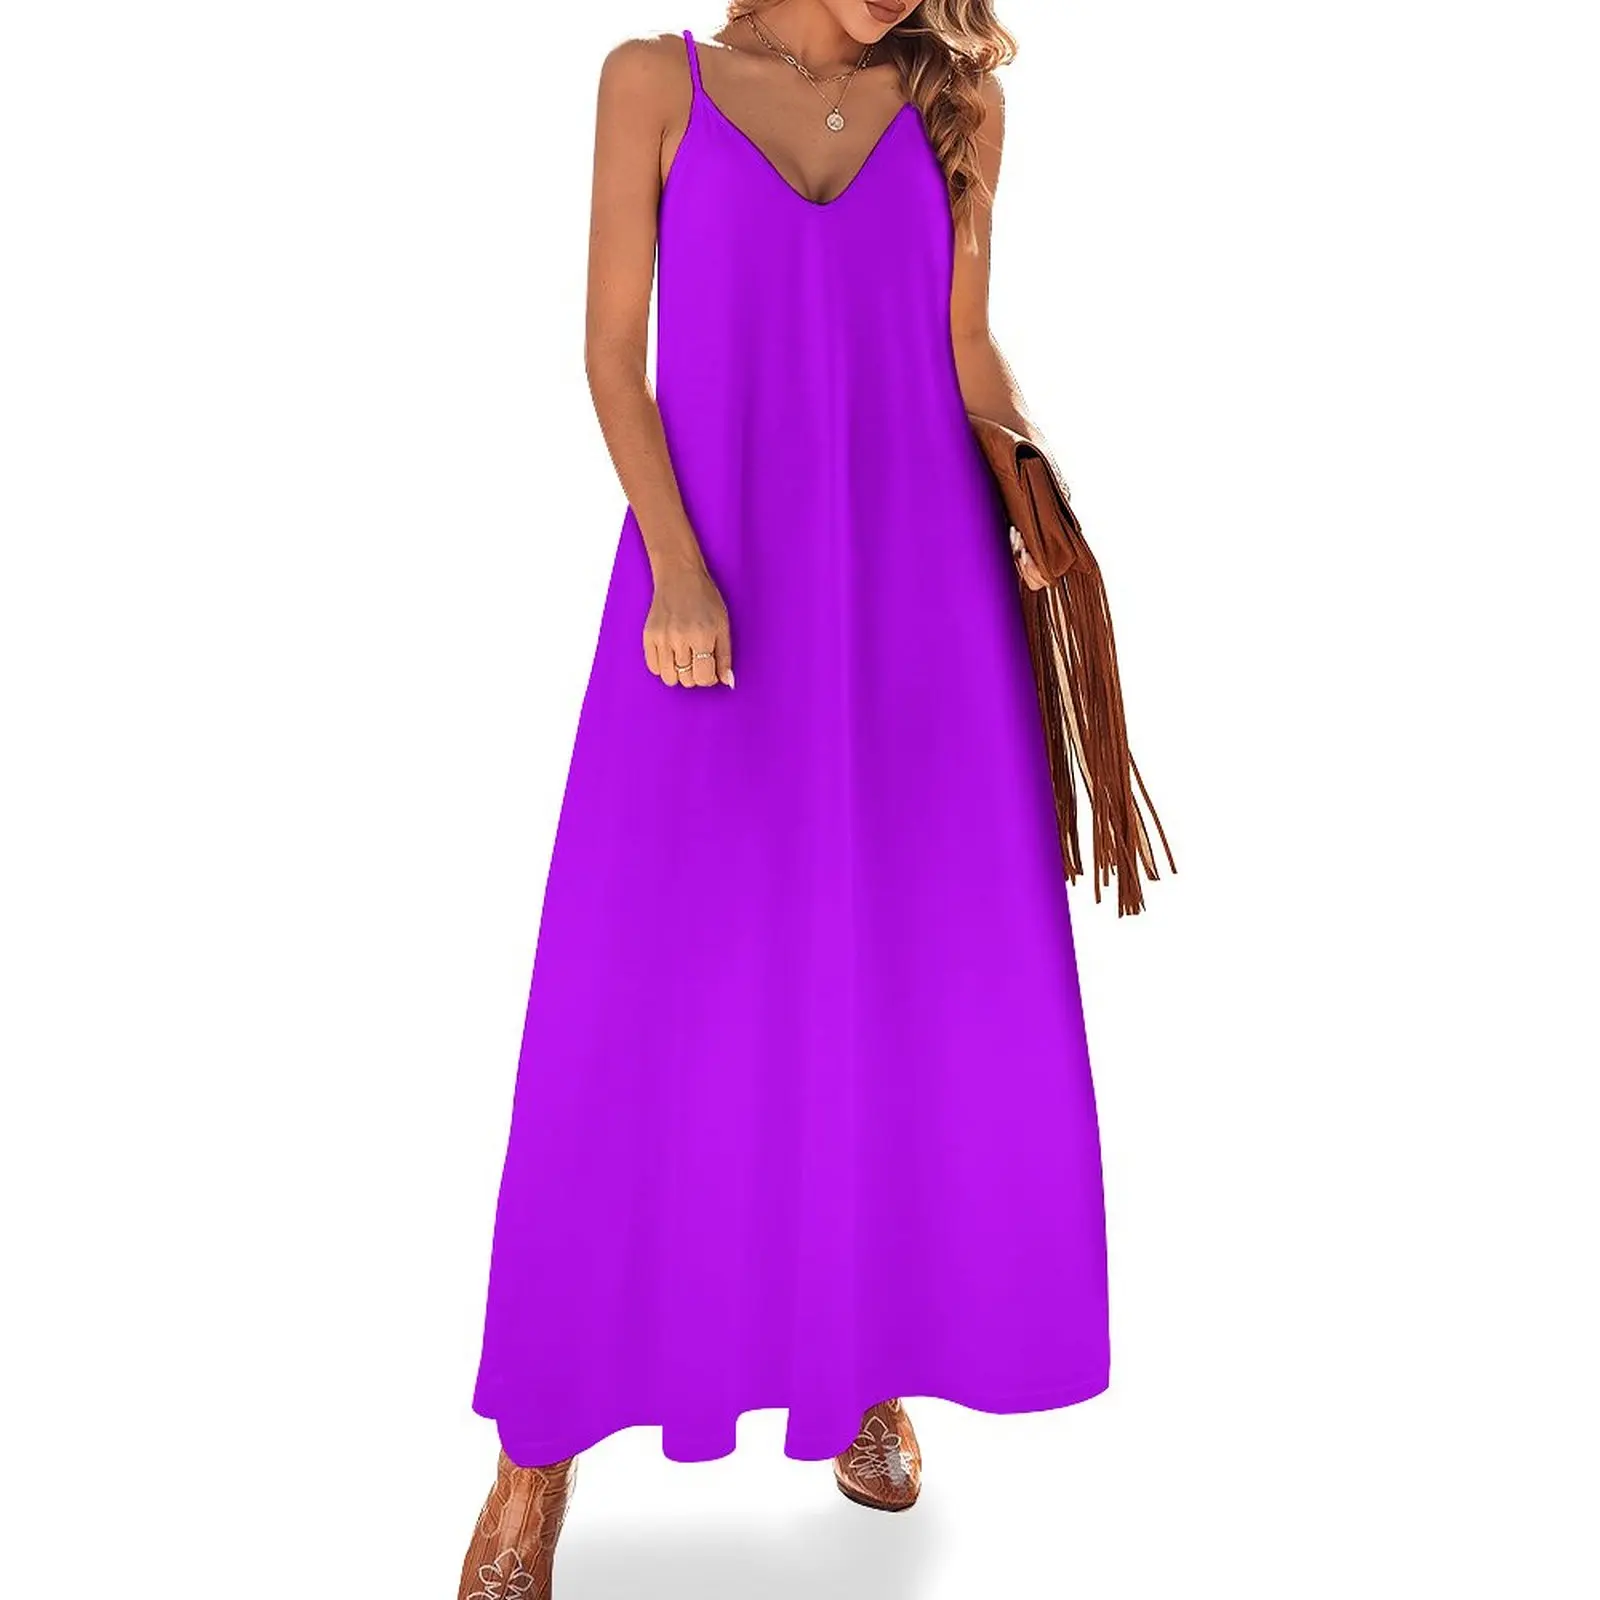 

Solid Colour | Electric Purple| Neon purple 2 Sleeveless Dress women's evening dresses Women's summer long dress Beachwear